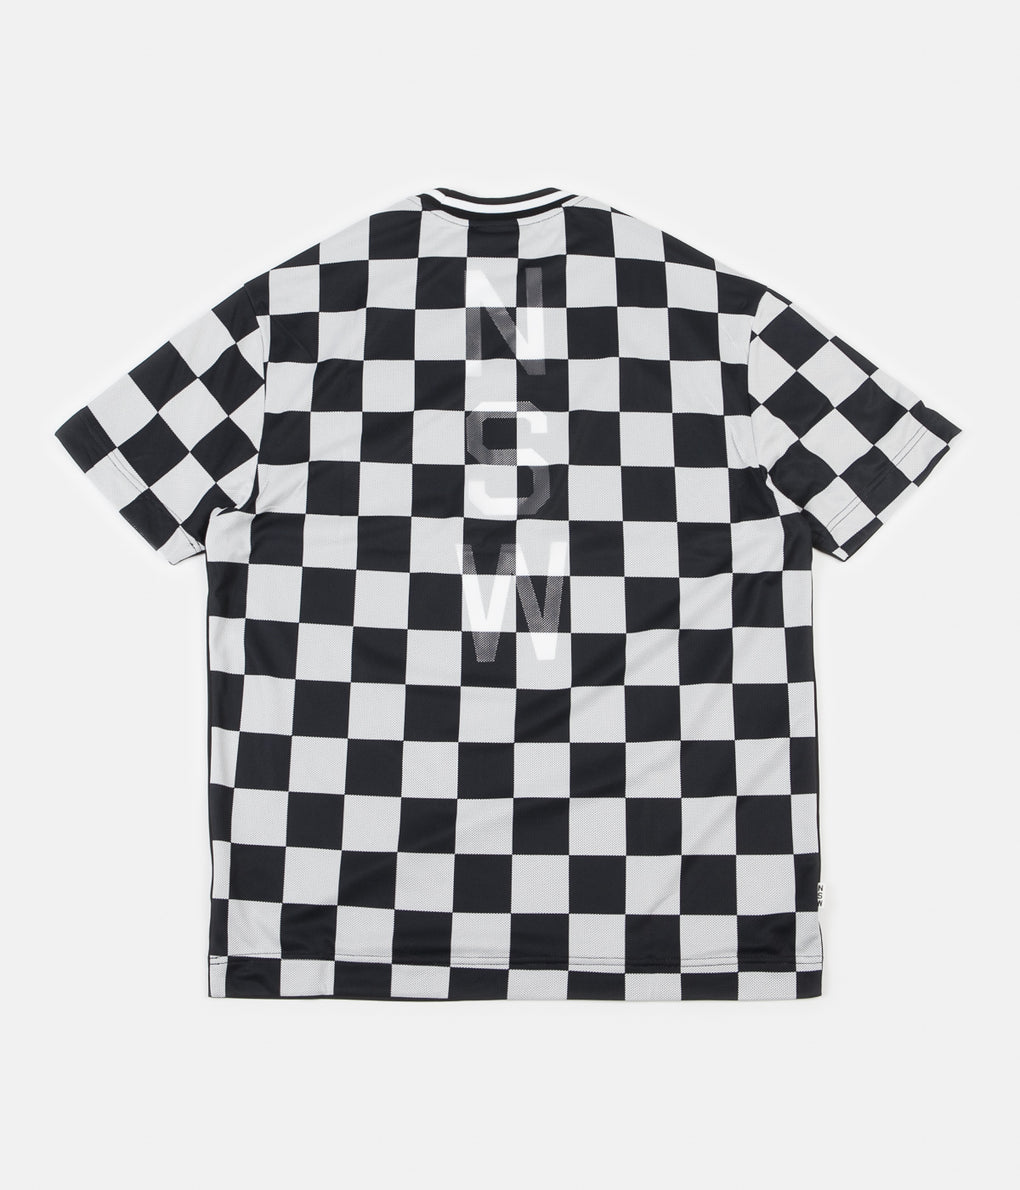 nike checkerboard shirt